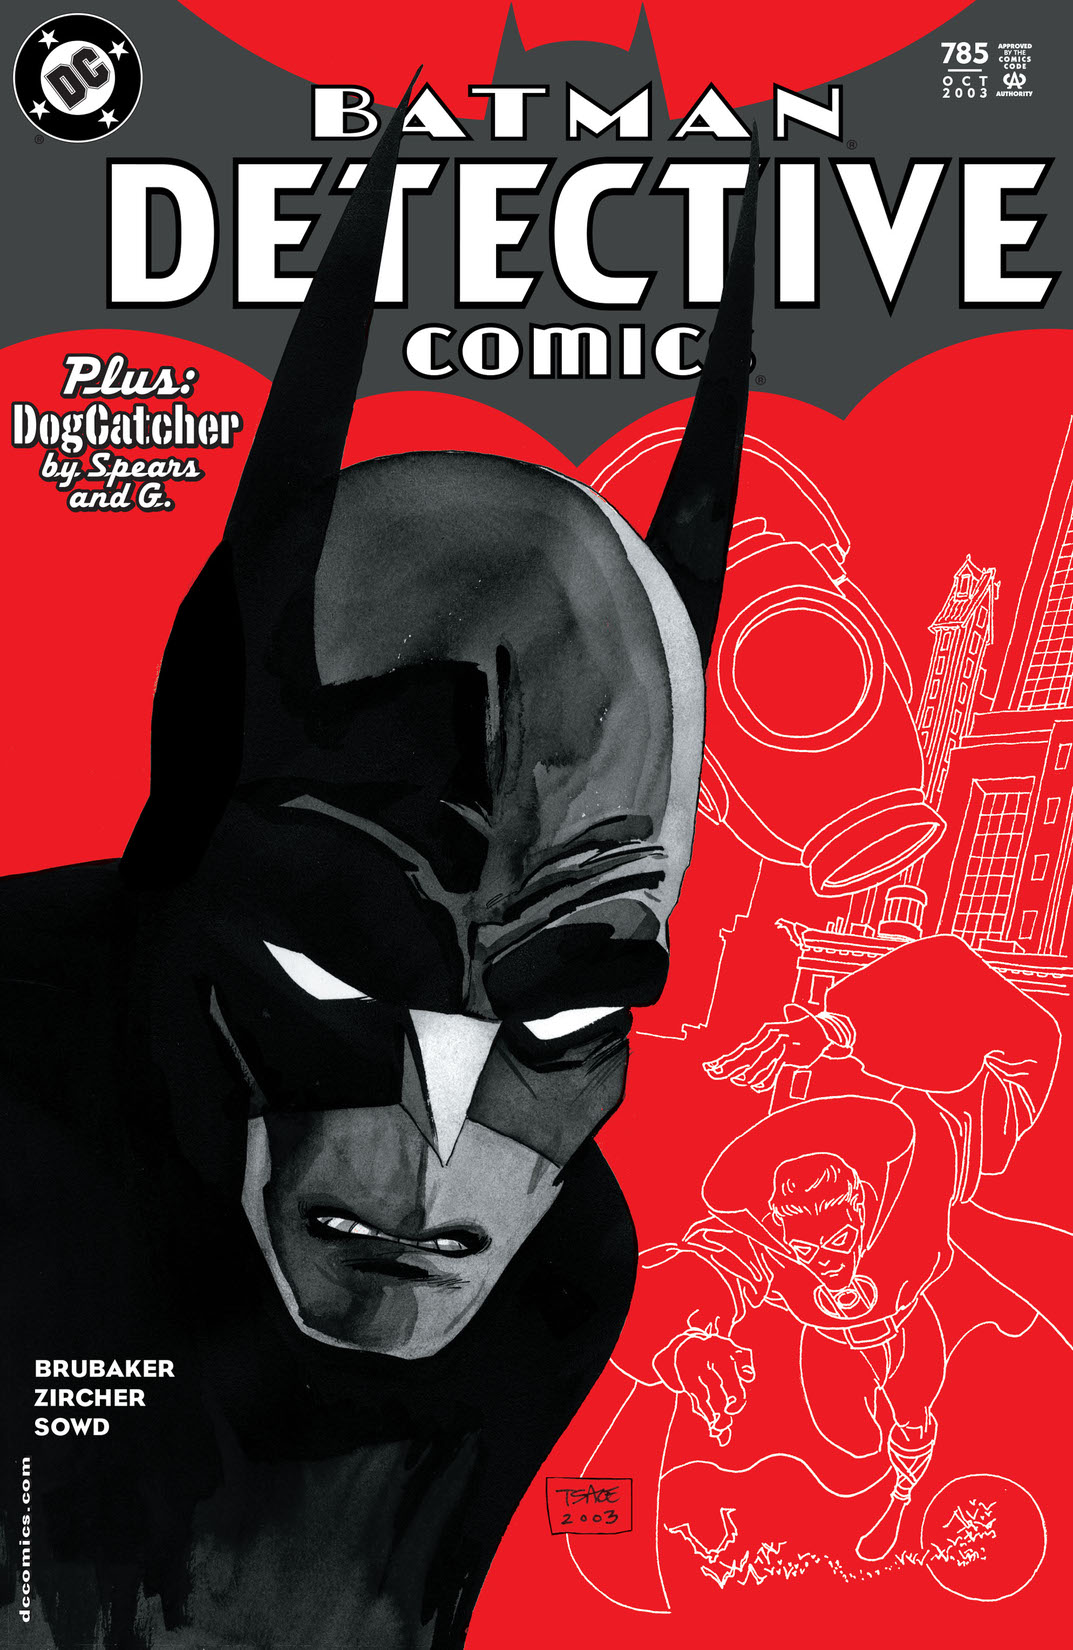 Detective Comics (1937-) #785 preview images